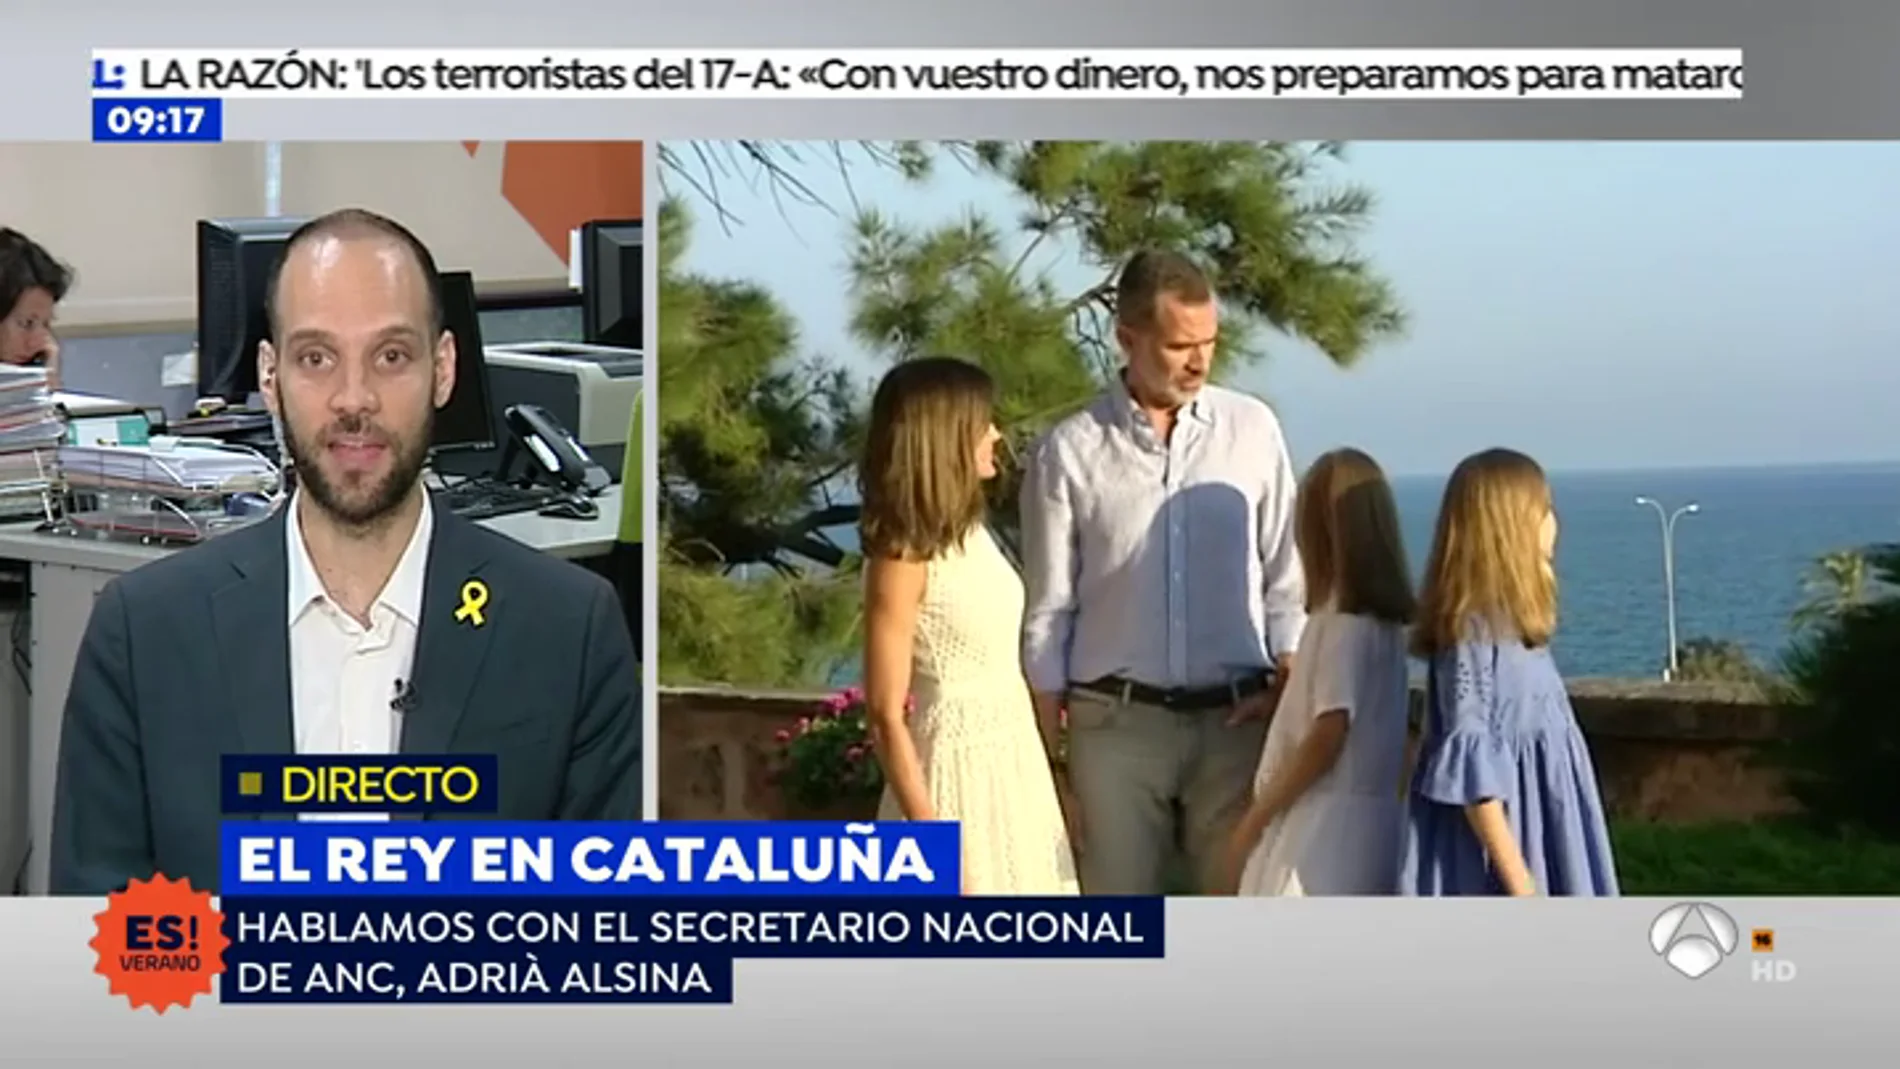 Adrià Alsina: "El rey renunció a serlo de parte de los catalanes después del discurso del 3 de octubre"